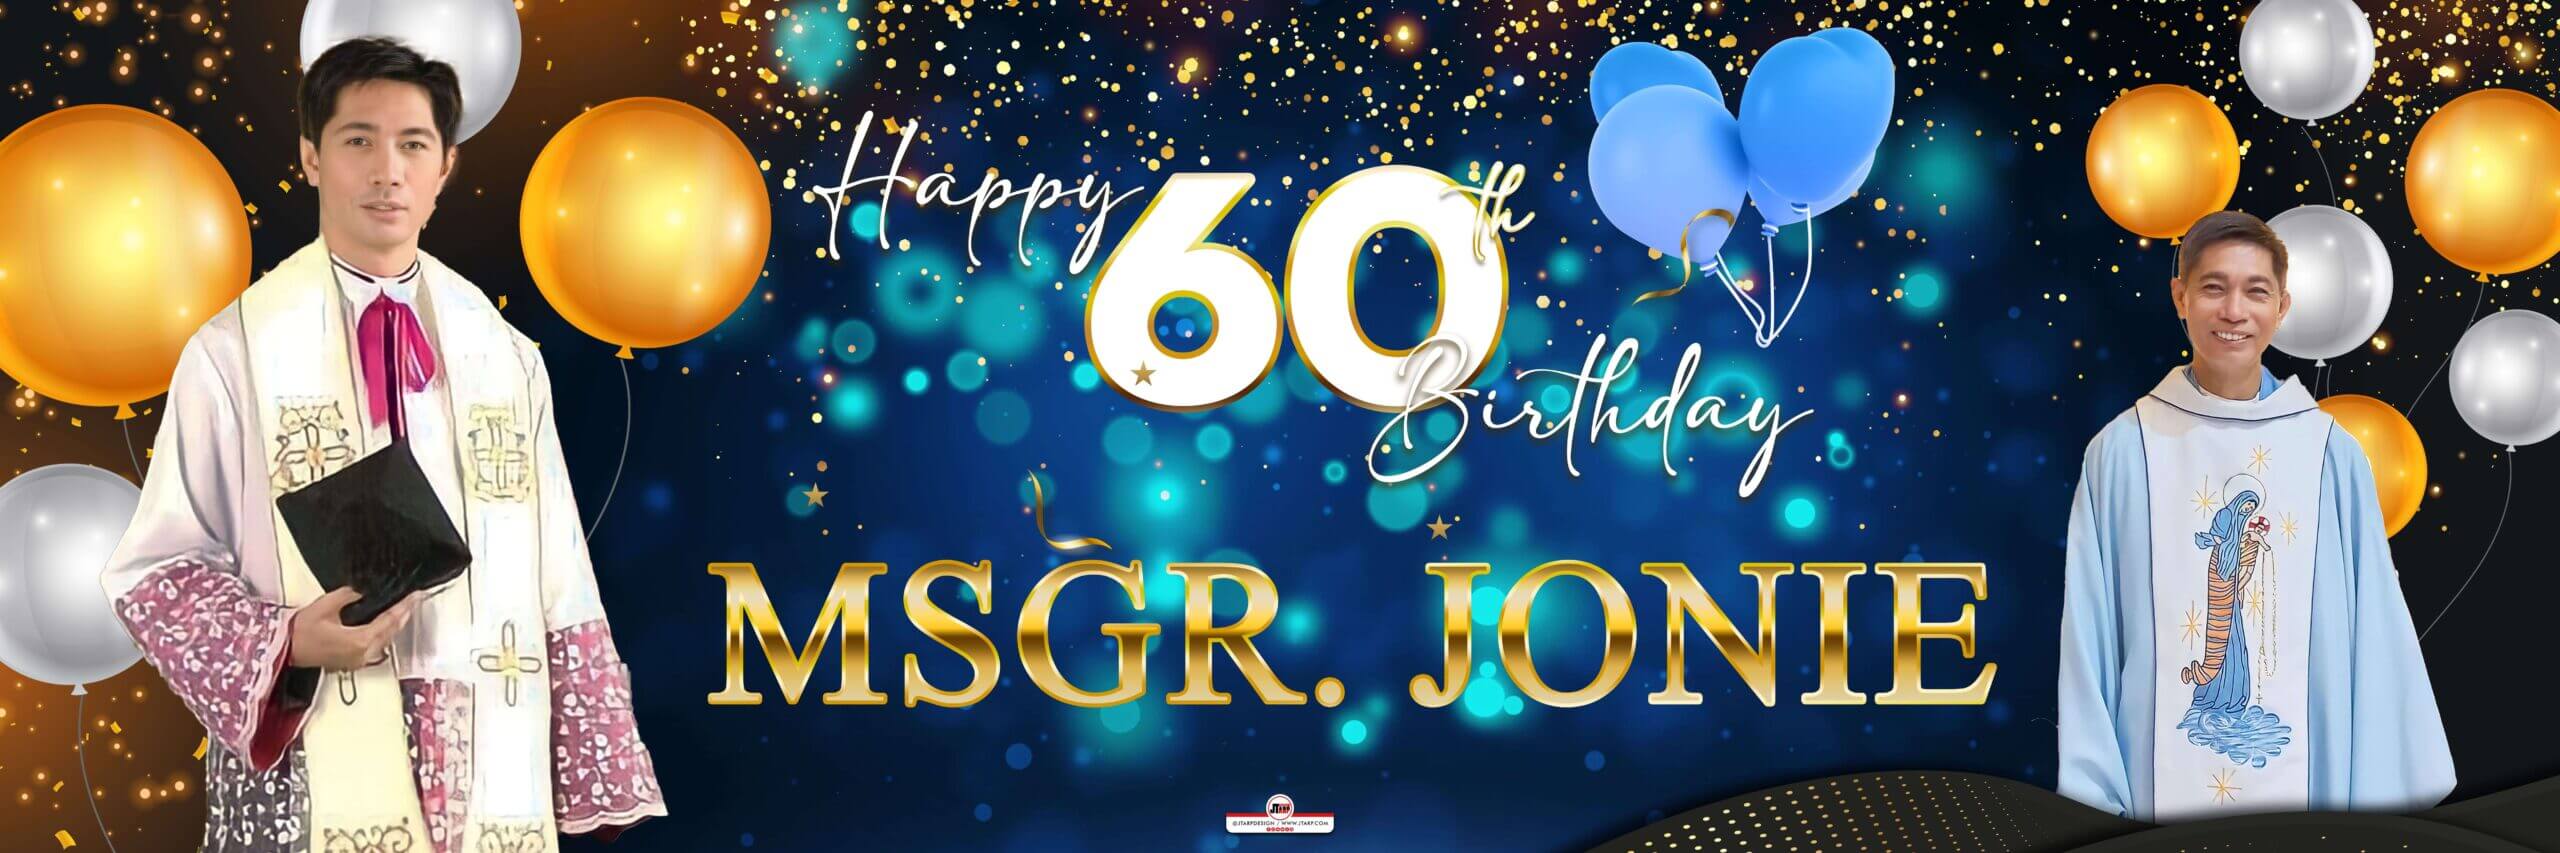 12x4 Black Gold Theme Happy 60th birthday Msgr. Jonie copy